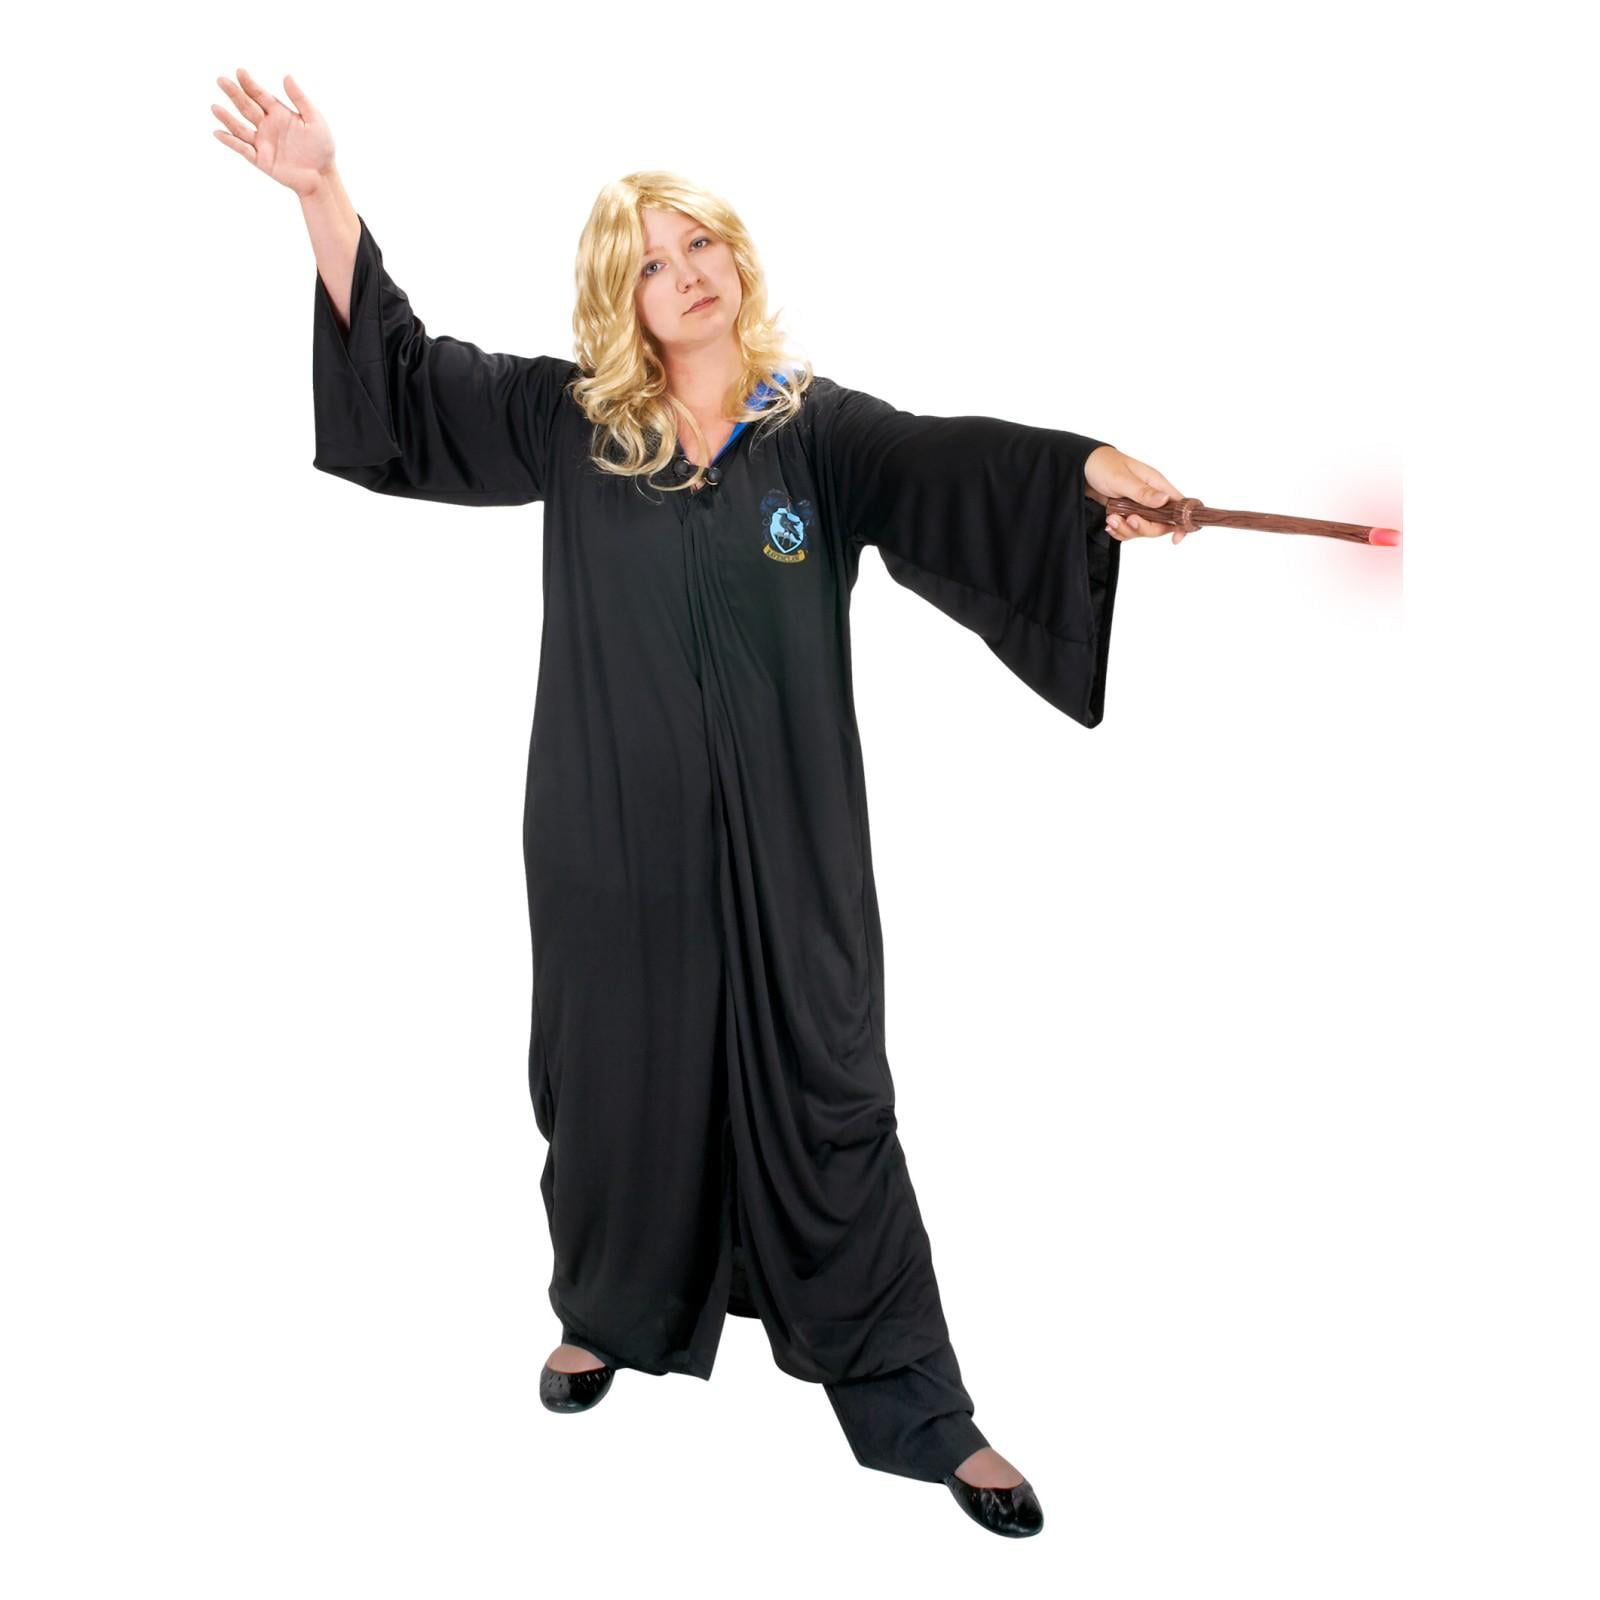 Luna Lovegood Adult Costume Kit - One-Size - Walmart.com - Walmart.com